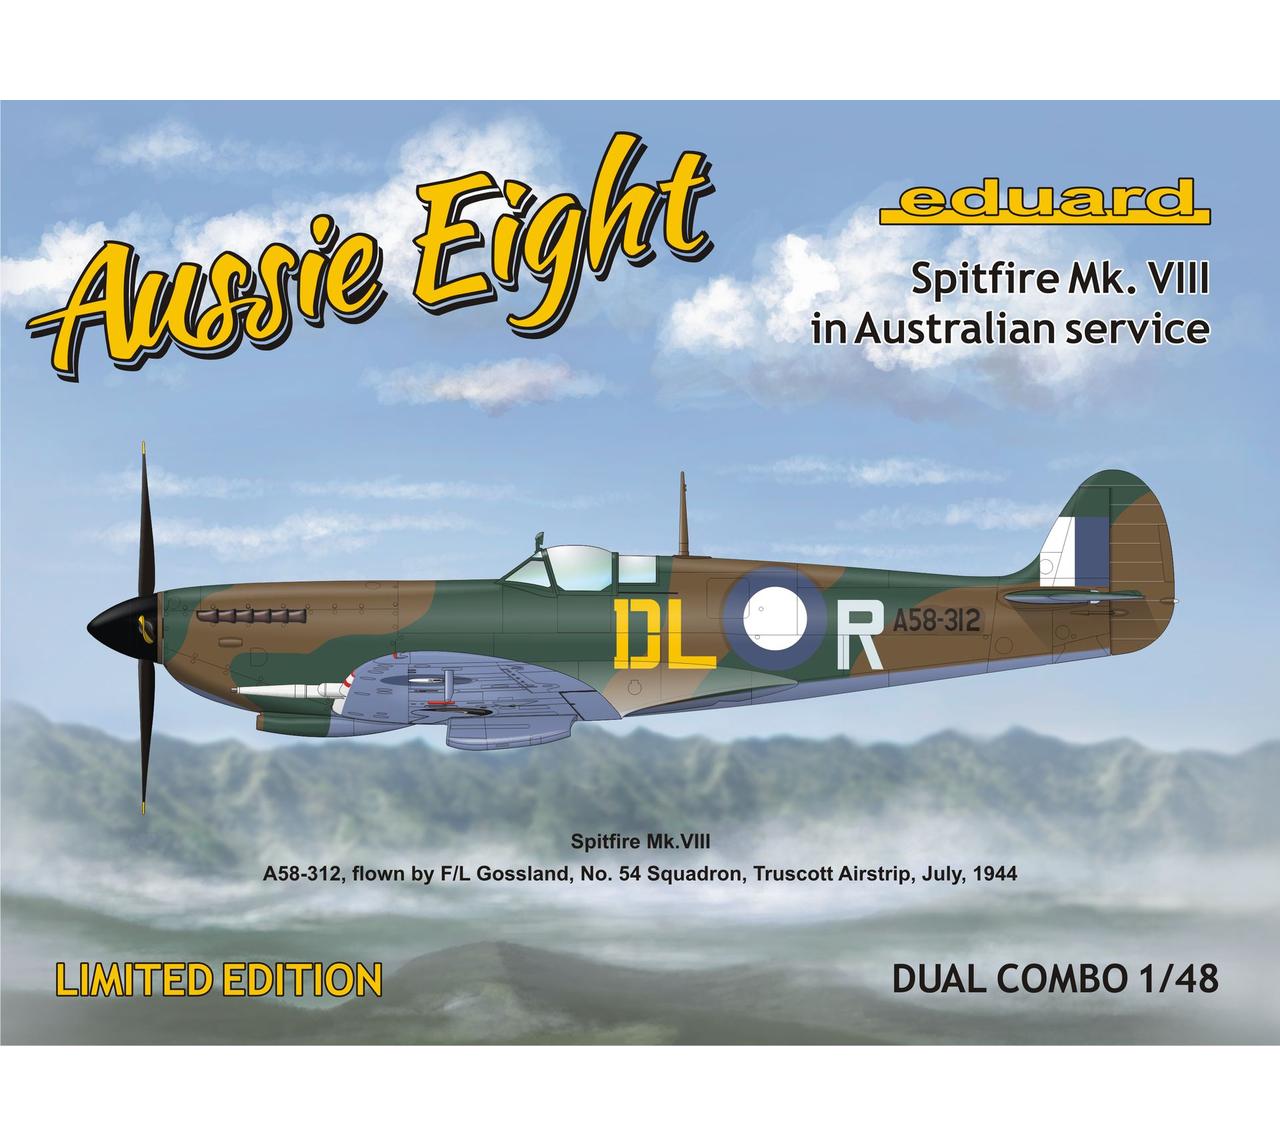 Eduard Spitfire-kavalkad, Aussie Eight #1 klar, Aussie Eight #2 NY!, Bonus: Airfix Spitfire XII - Sida 12 30